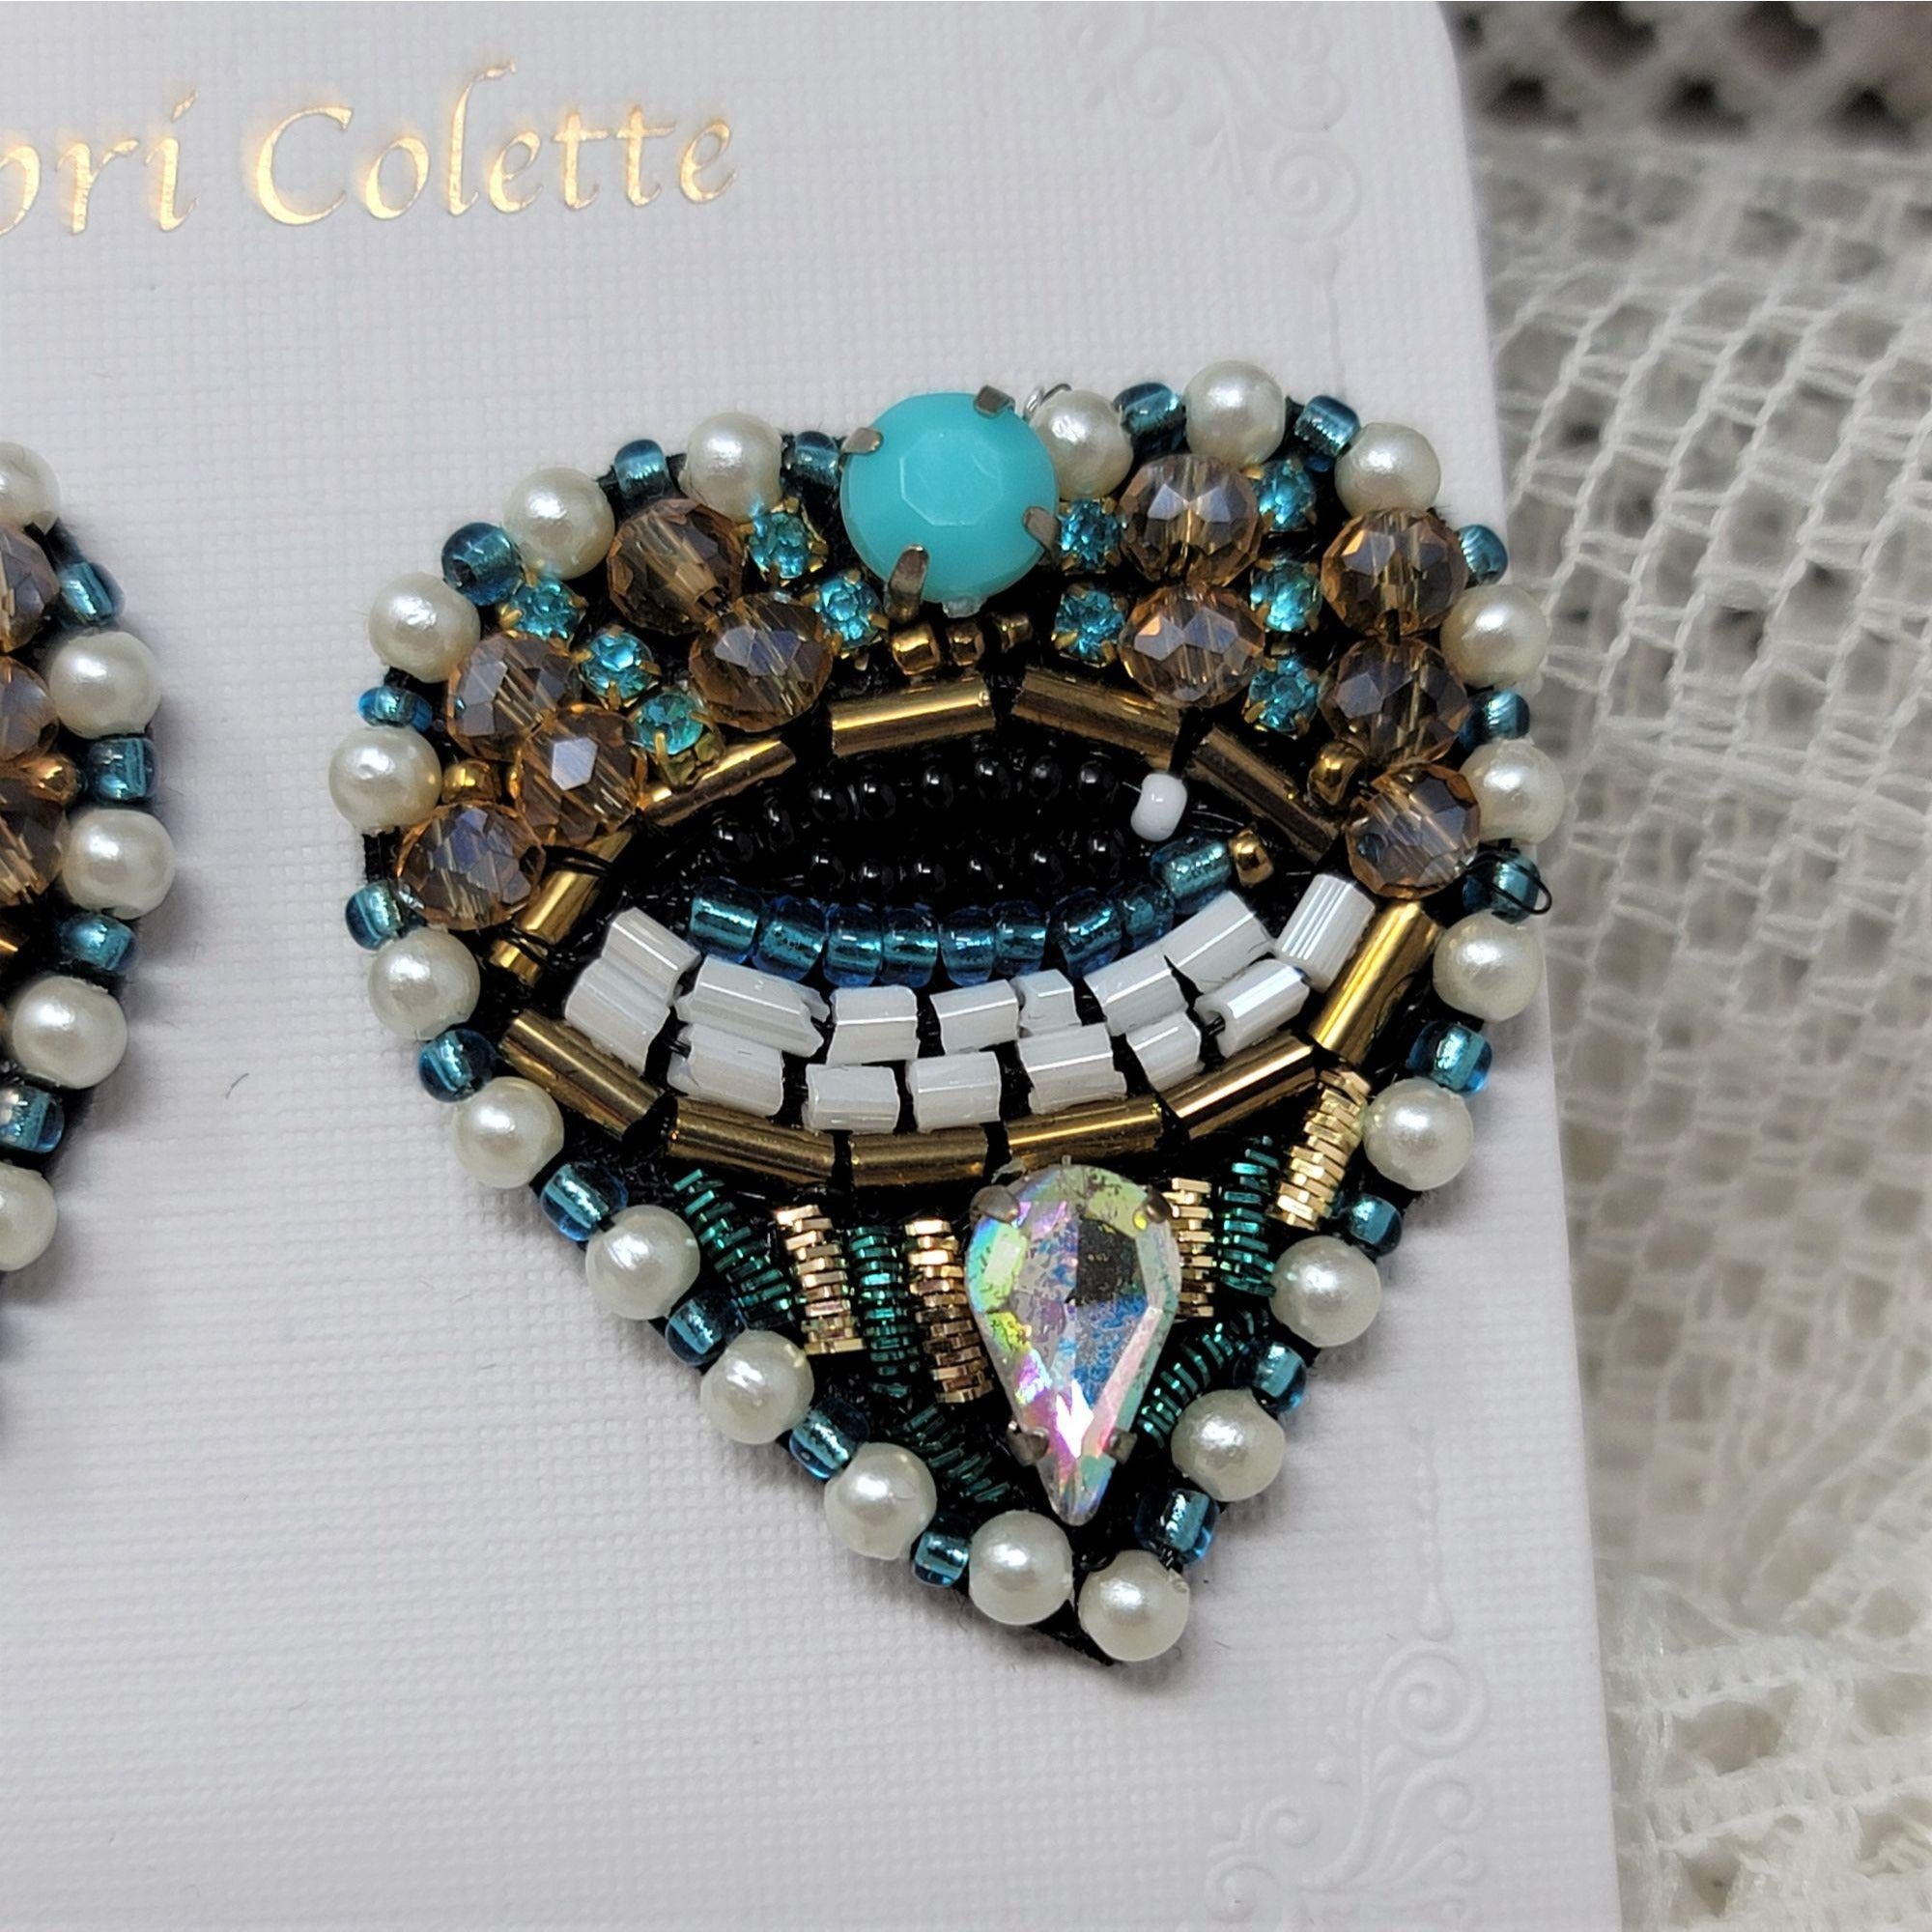 Capri Colette Rhinestone & Seed Eye Earrings Pierced NWOT